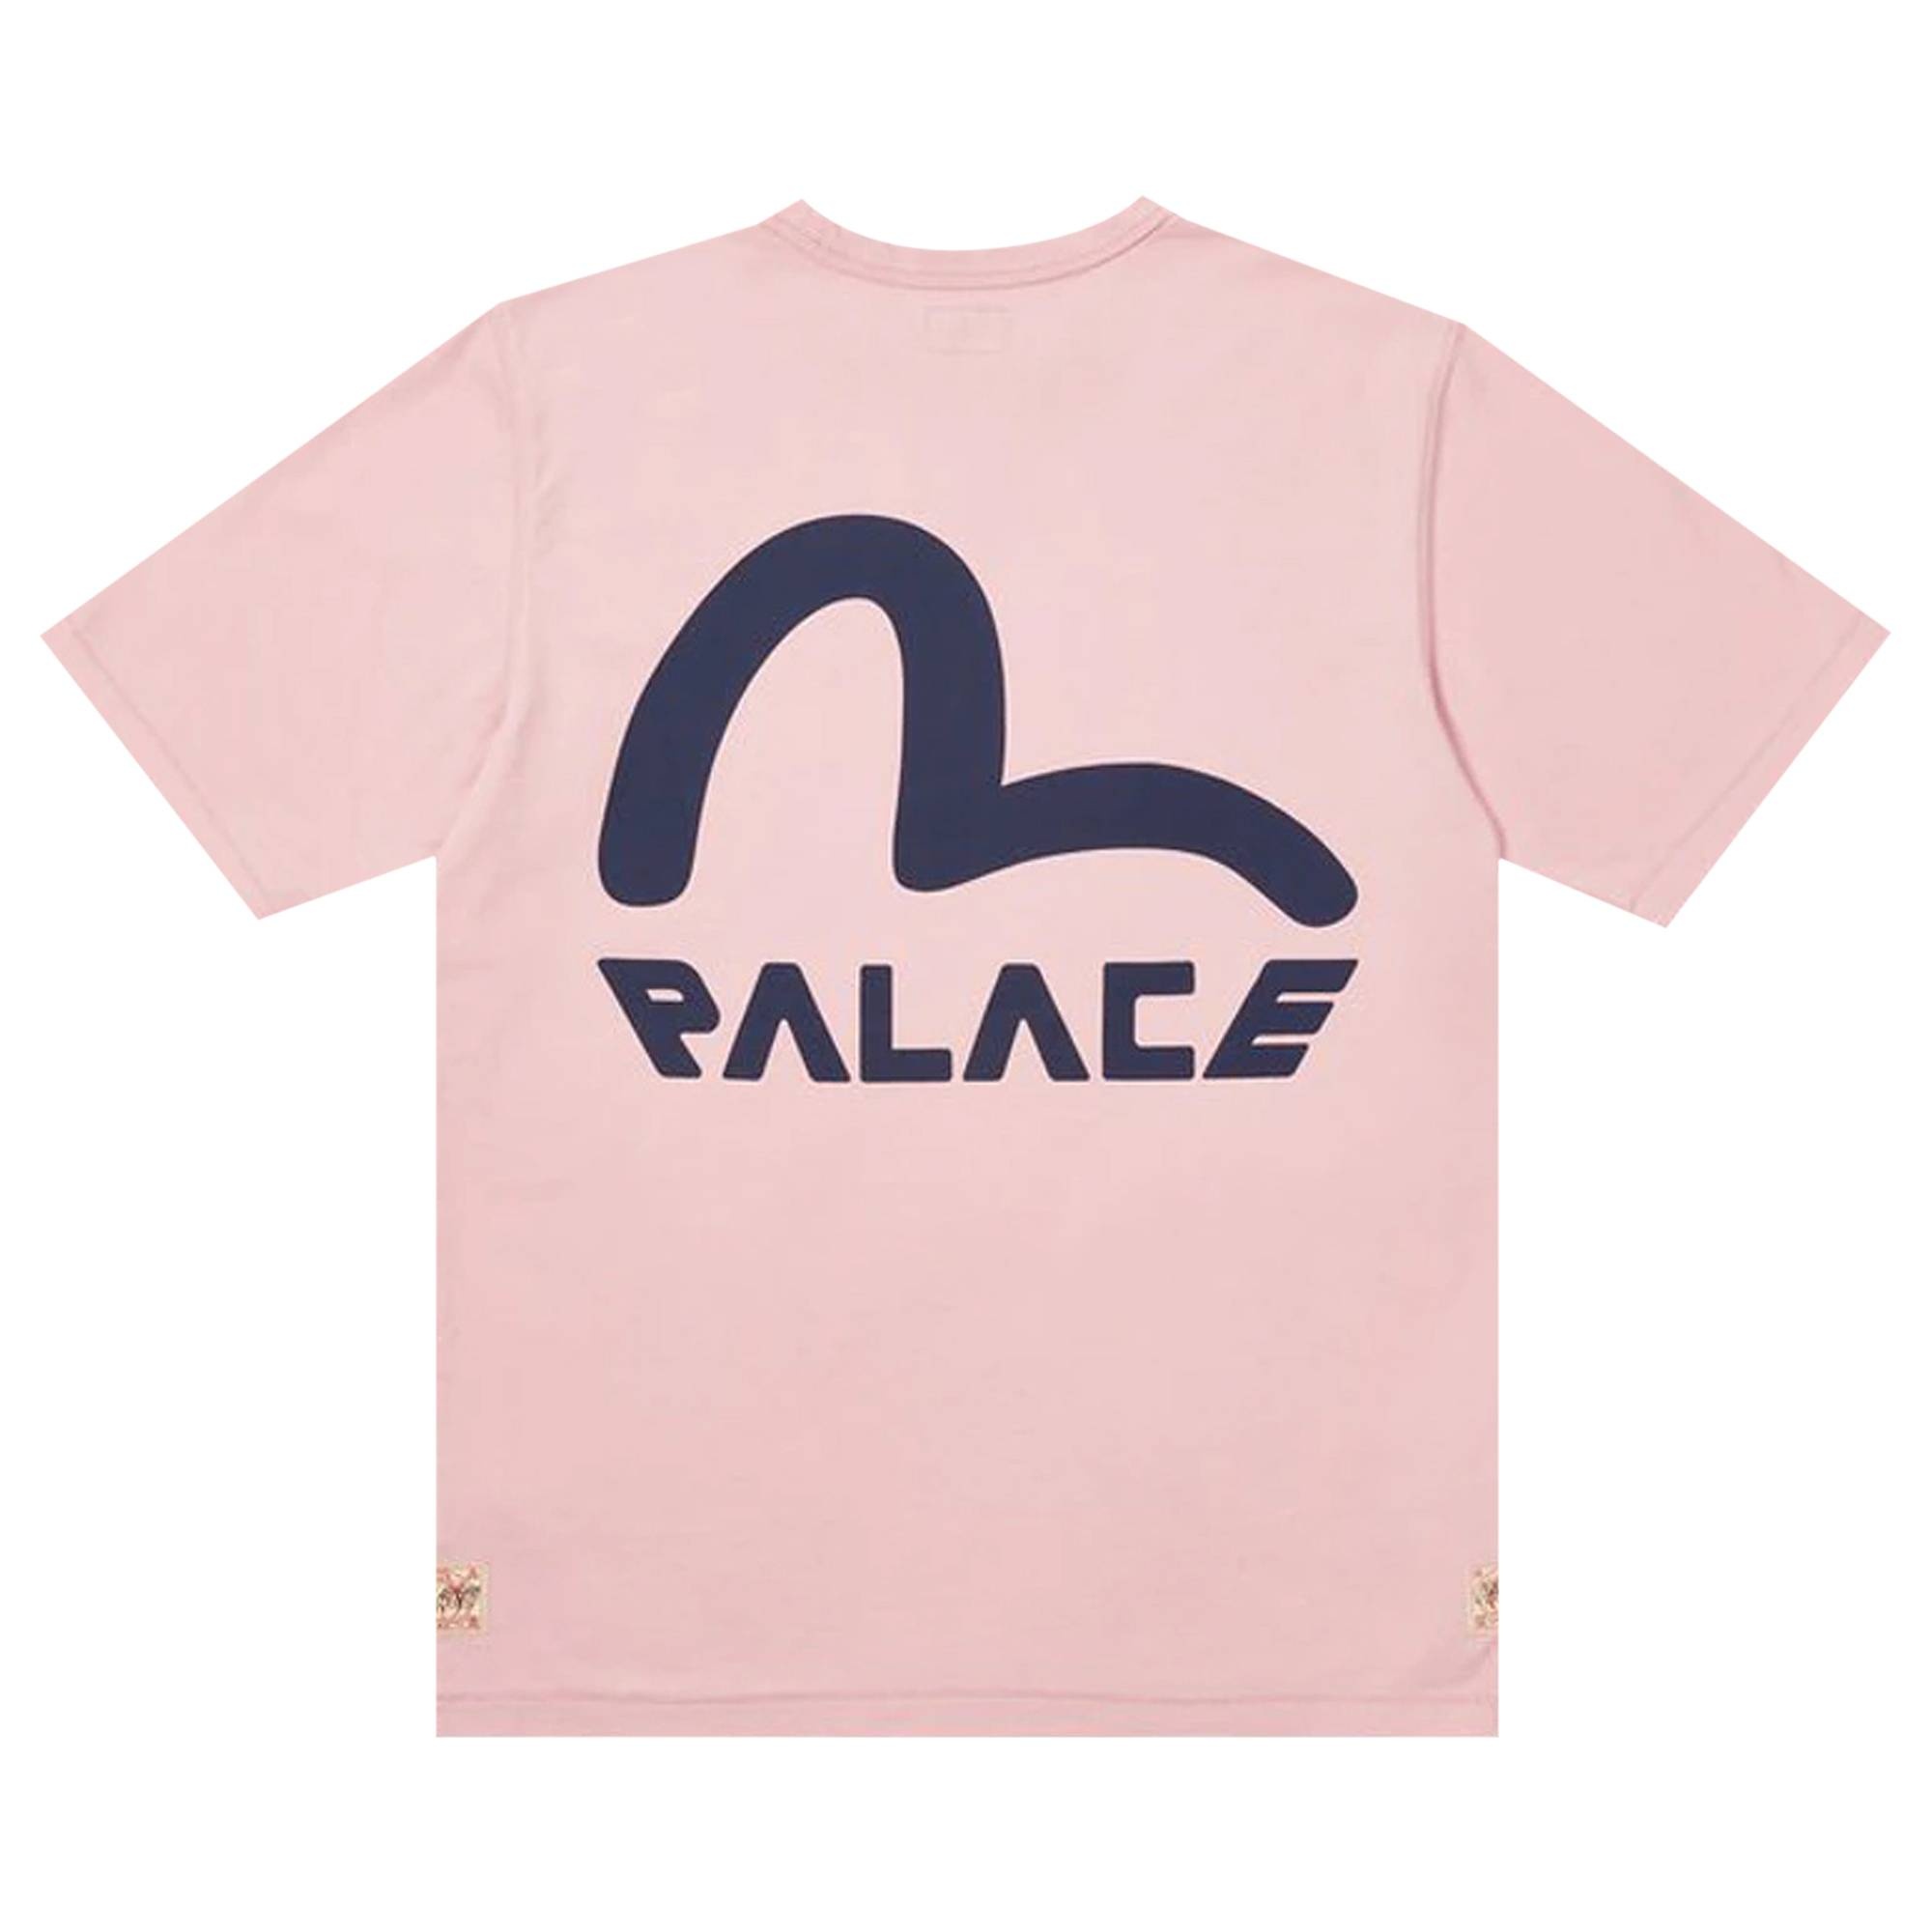 Palace x Evisu Seagull T-Shirt 'Pink Nectar' - 2